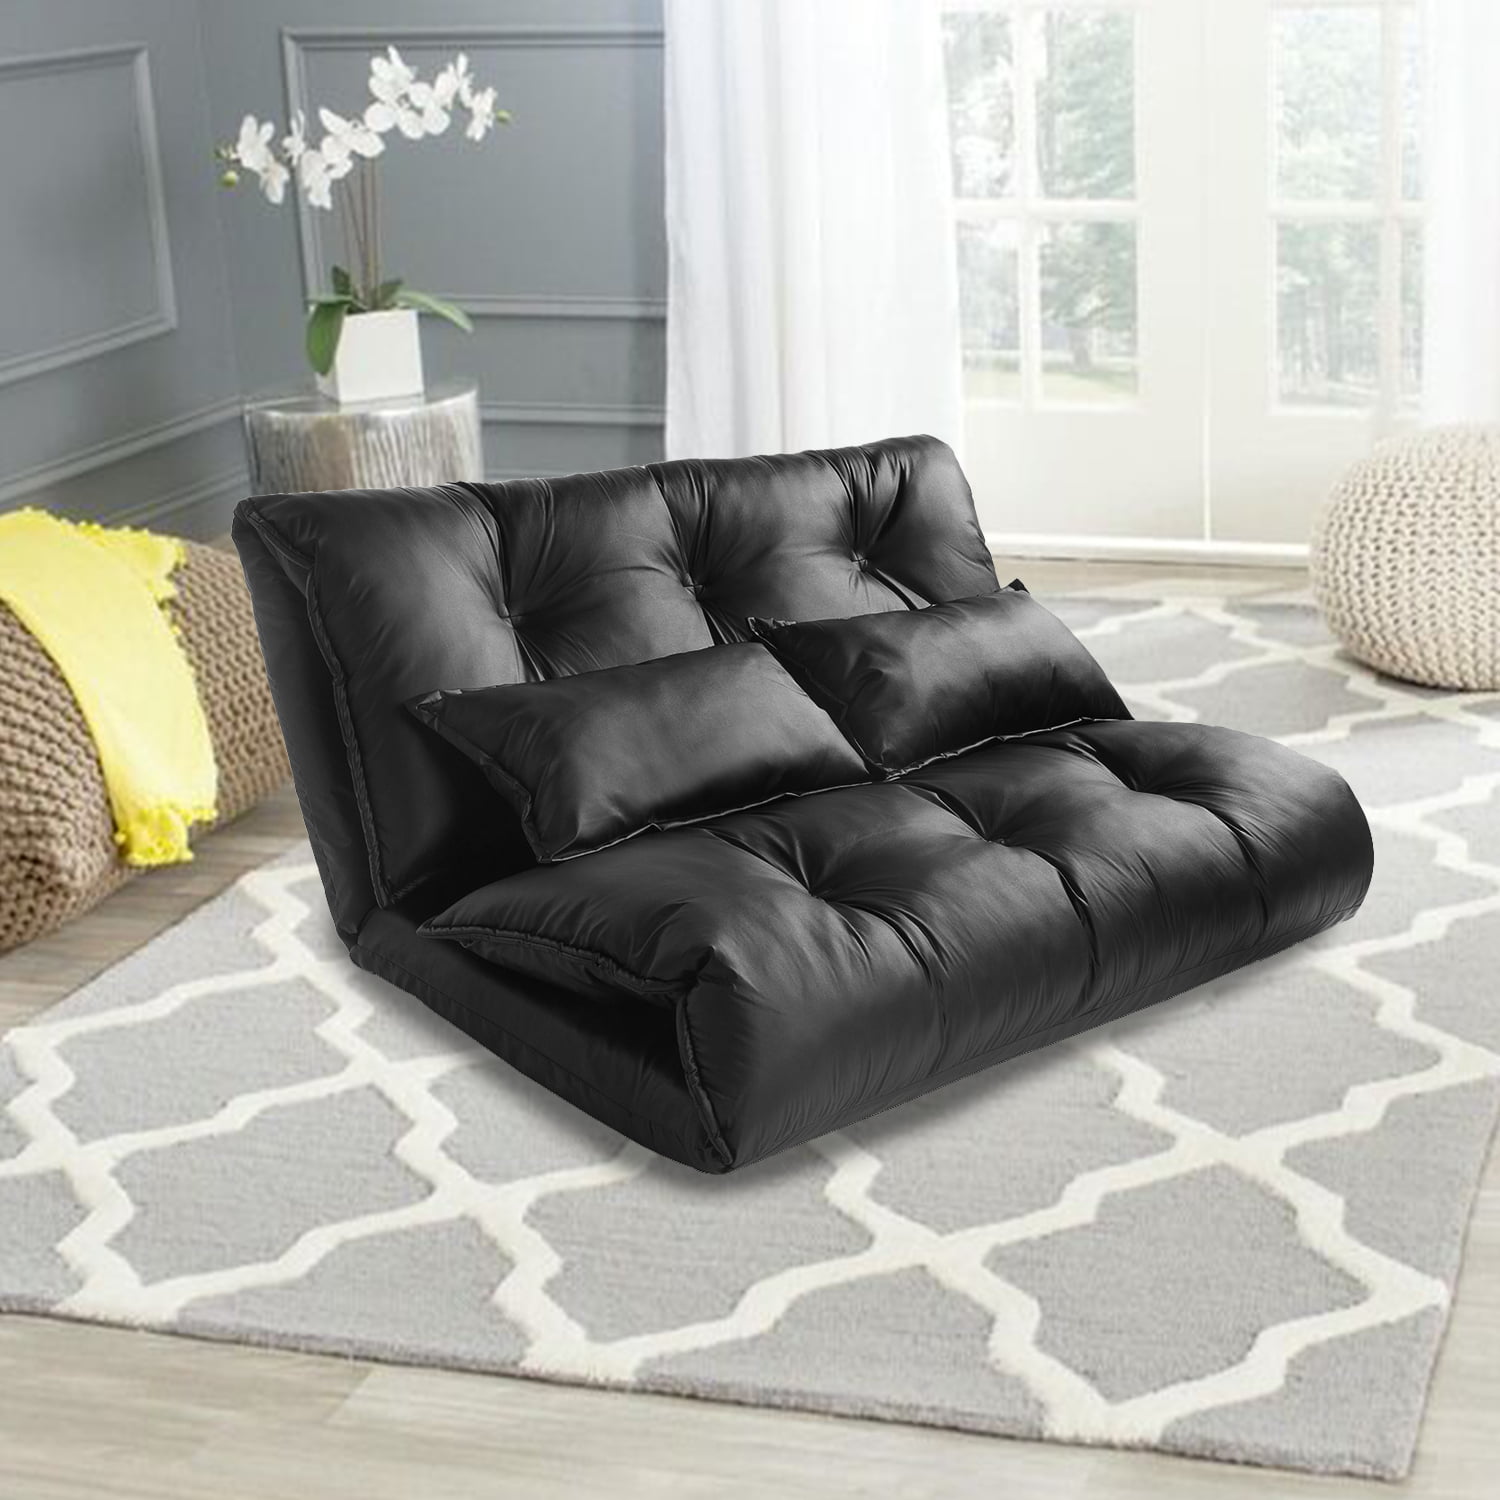 Floor Sofa Bed Folding Chaise Lounge, Sleeper Chaise Lounge Chair